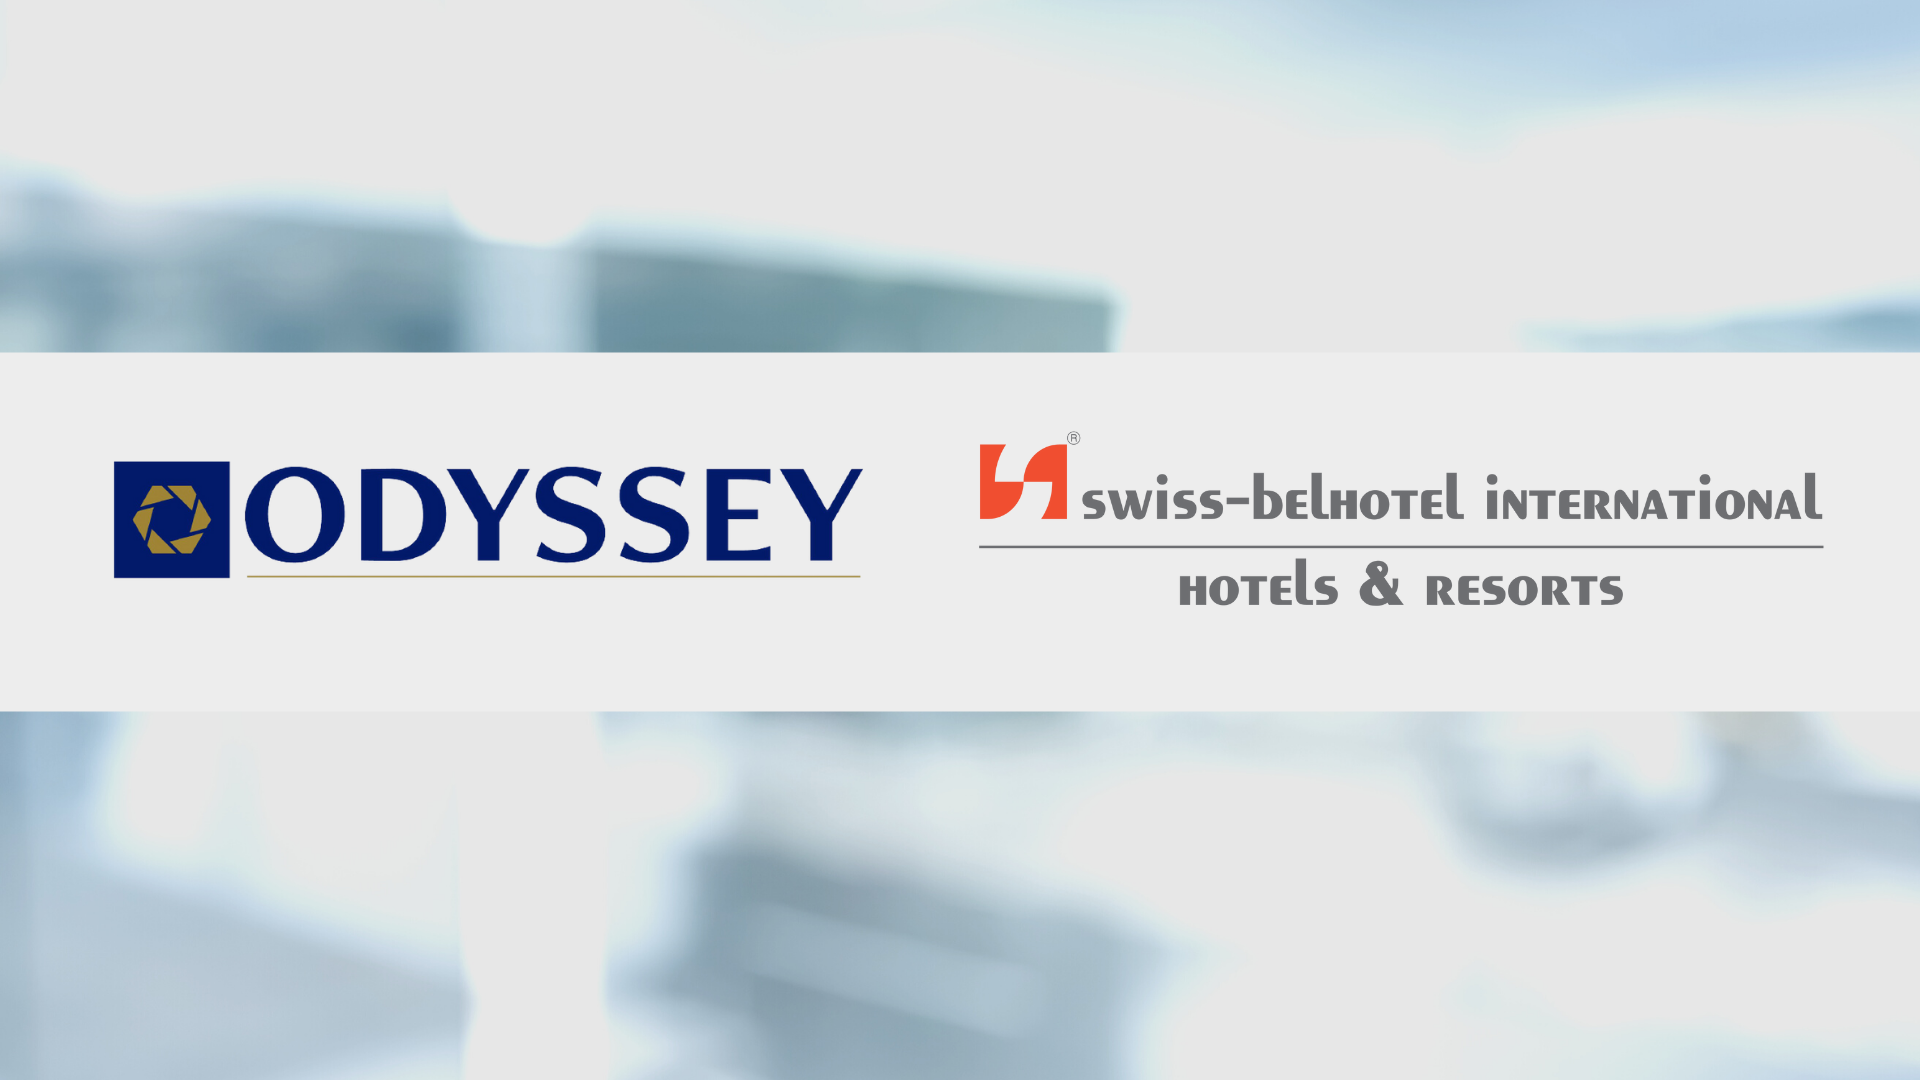 SWISS-BELHOTEL INTERNATIONAL ANNOUNCES  JOINT VENTURE WITH ODYSSEY GROUP